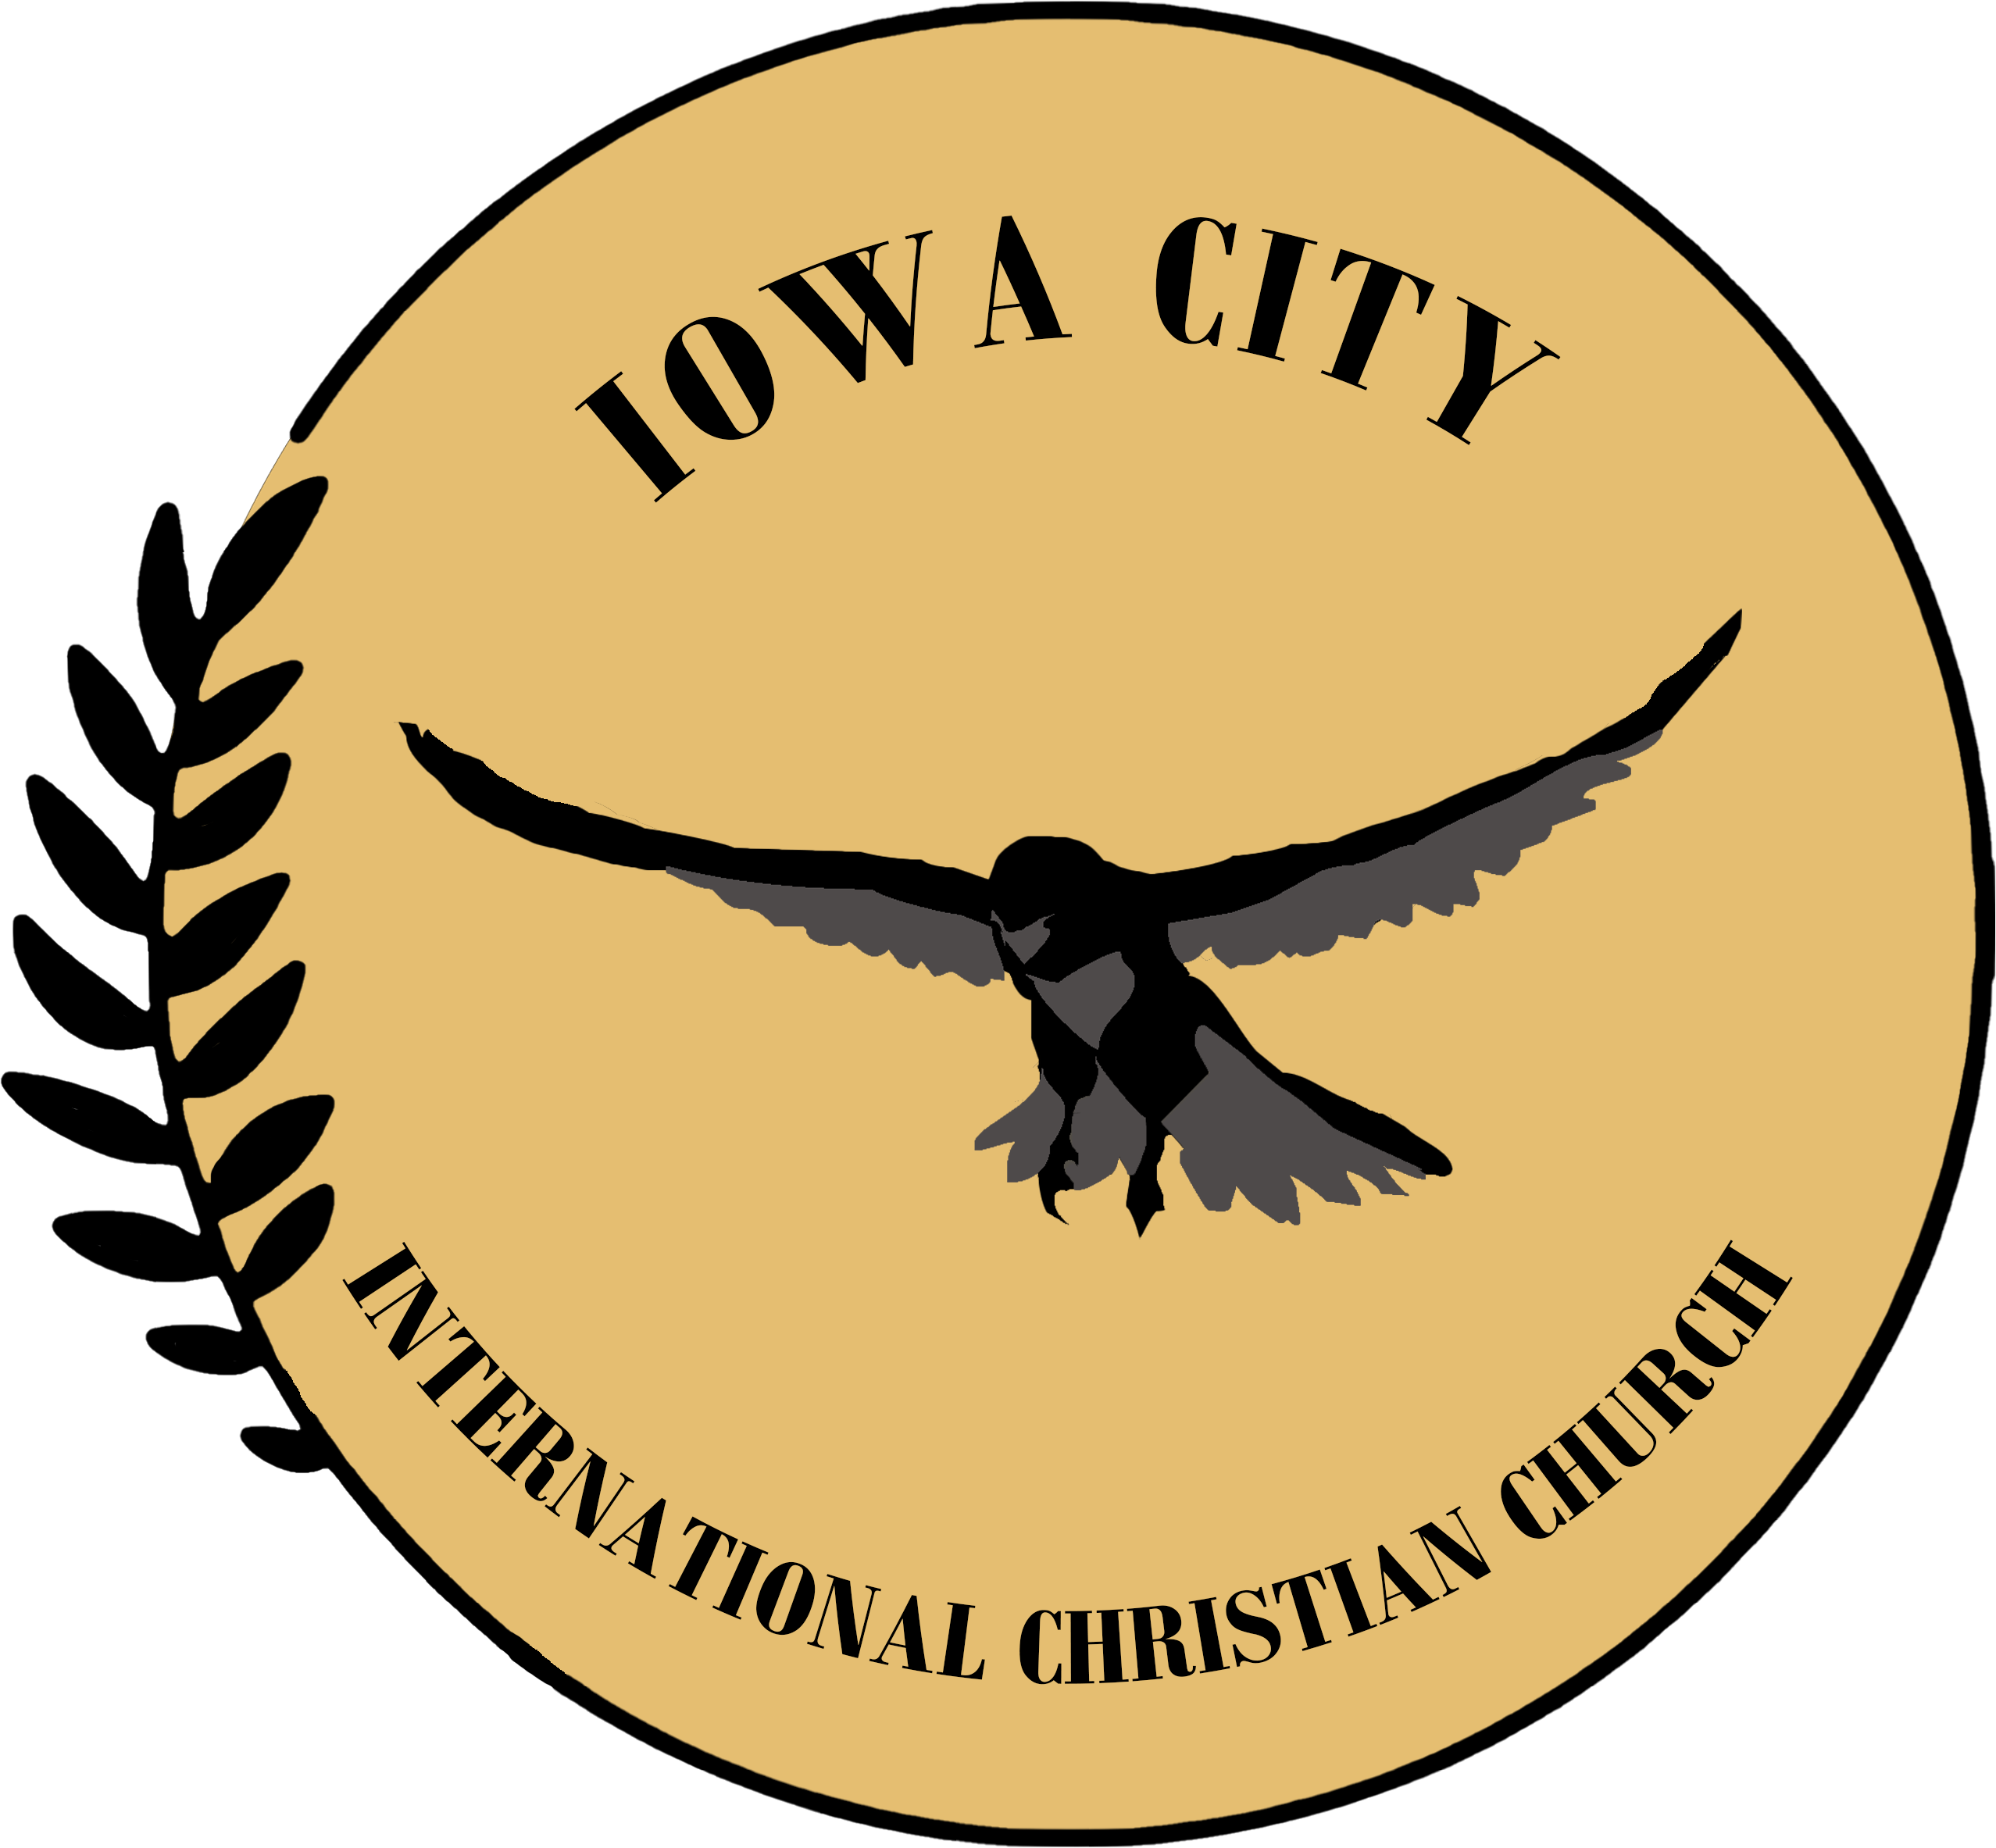 Iowa City International Christian Church